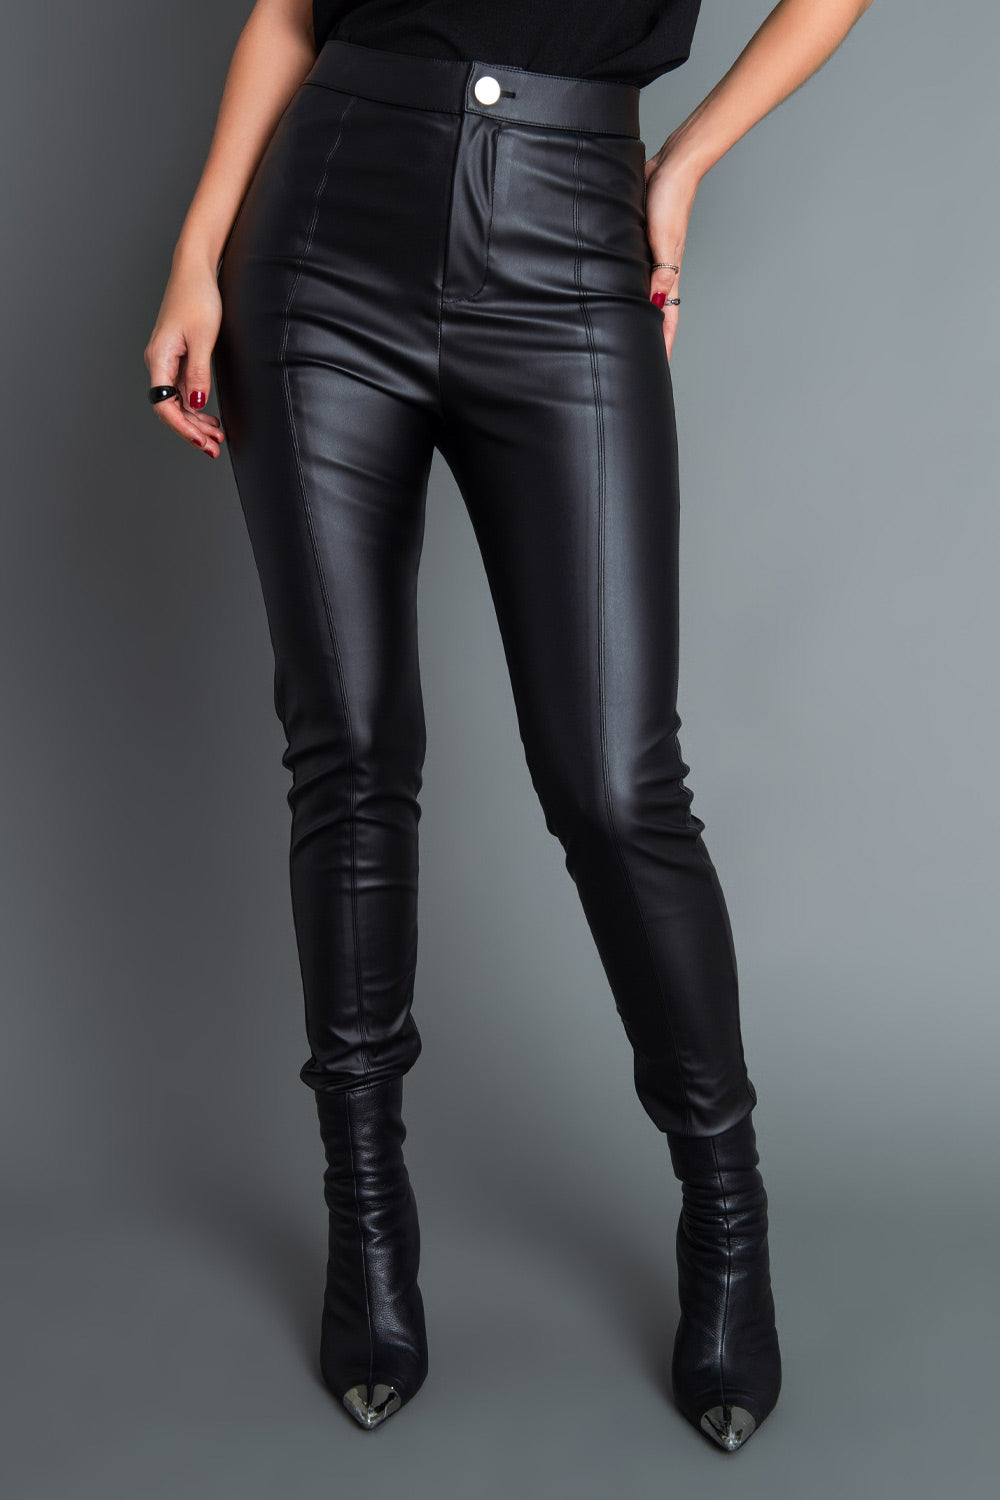 Leggings de piel sintética de cintura alta con abertura hasta la rodilla en  color negro, talla L, Negro 